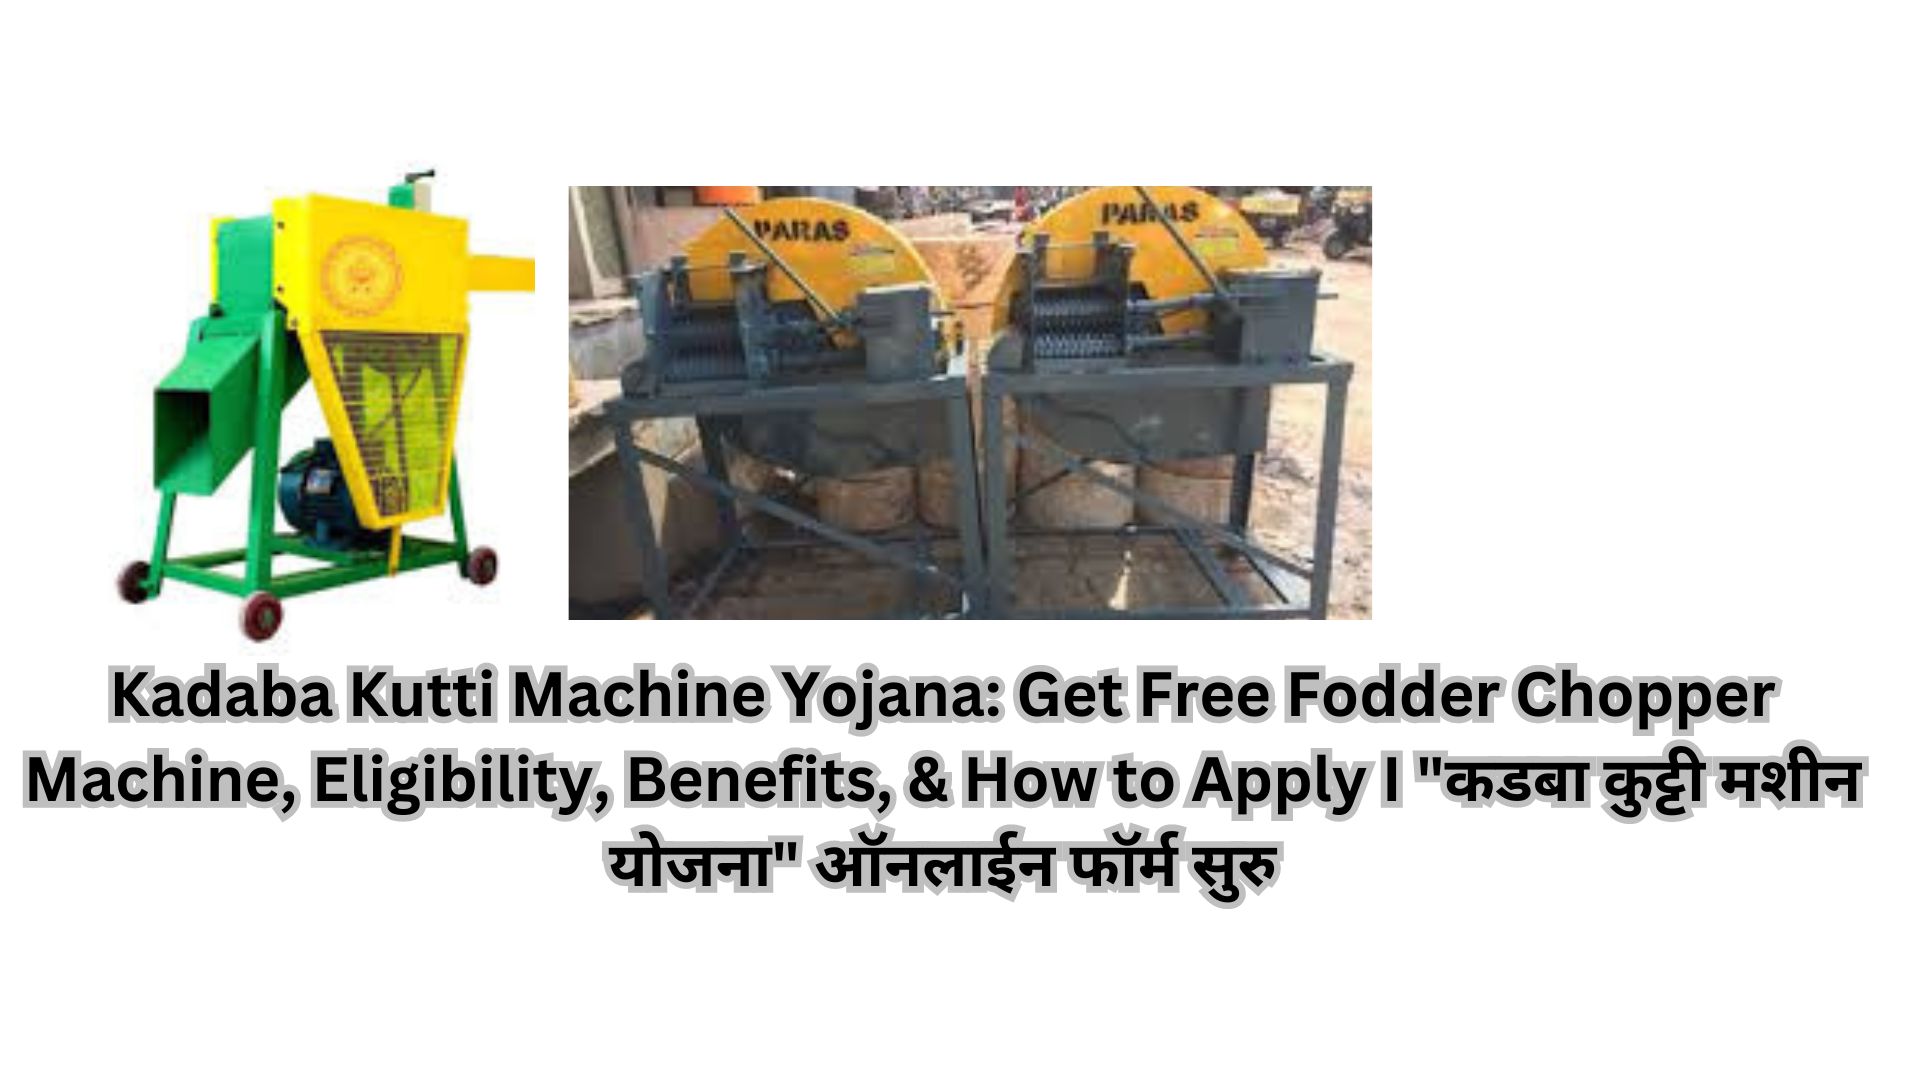 Kadaba Kutti Machine Yojana: Get Free Fodder Chopper Machine, Eligibility, Benefits, & How to Apply I "कडबा कुट्टी मशीन योजना" ऑनलाईन फॉर्म सुरु